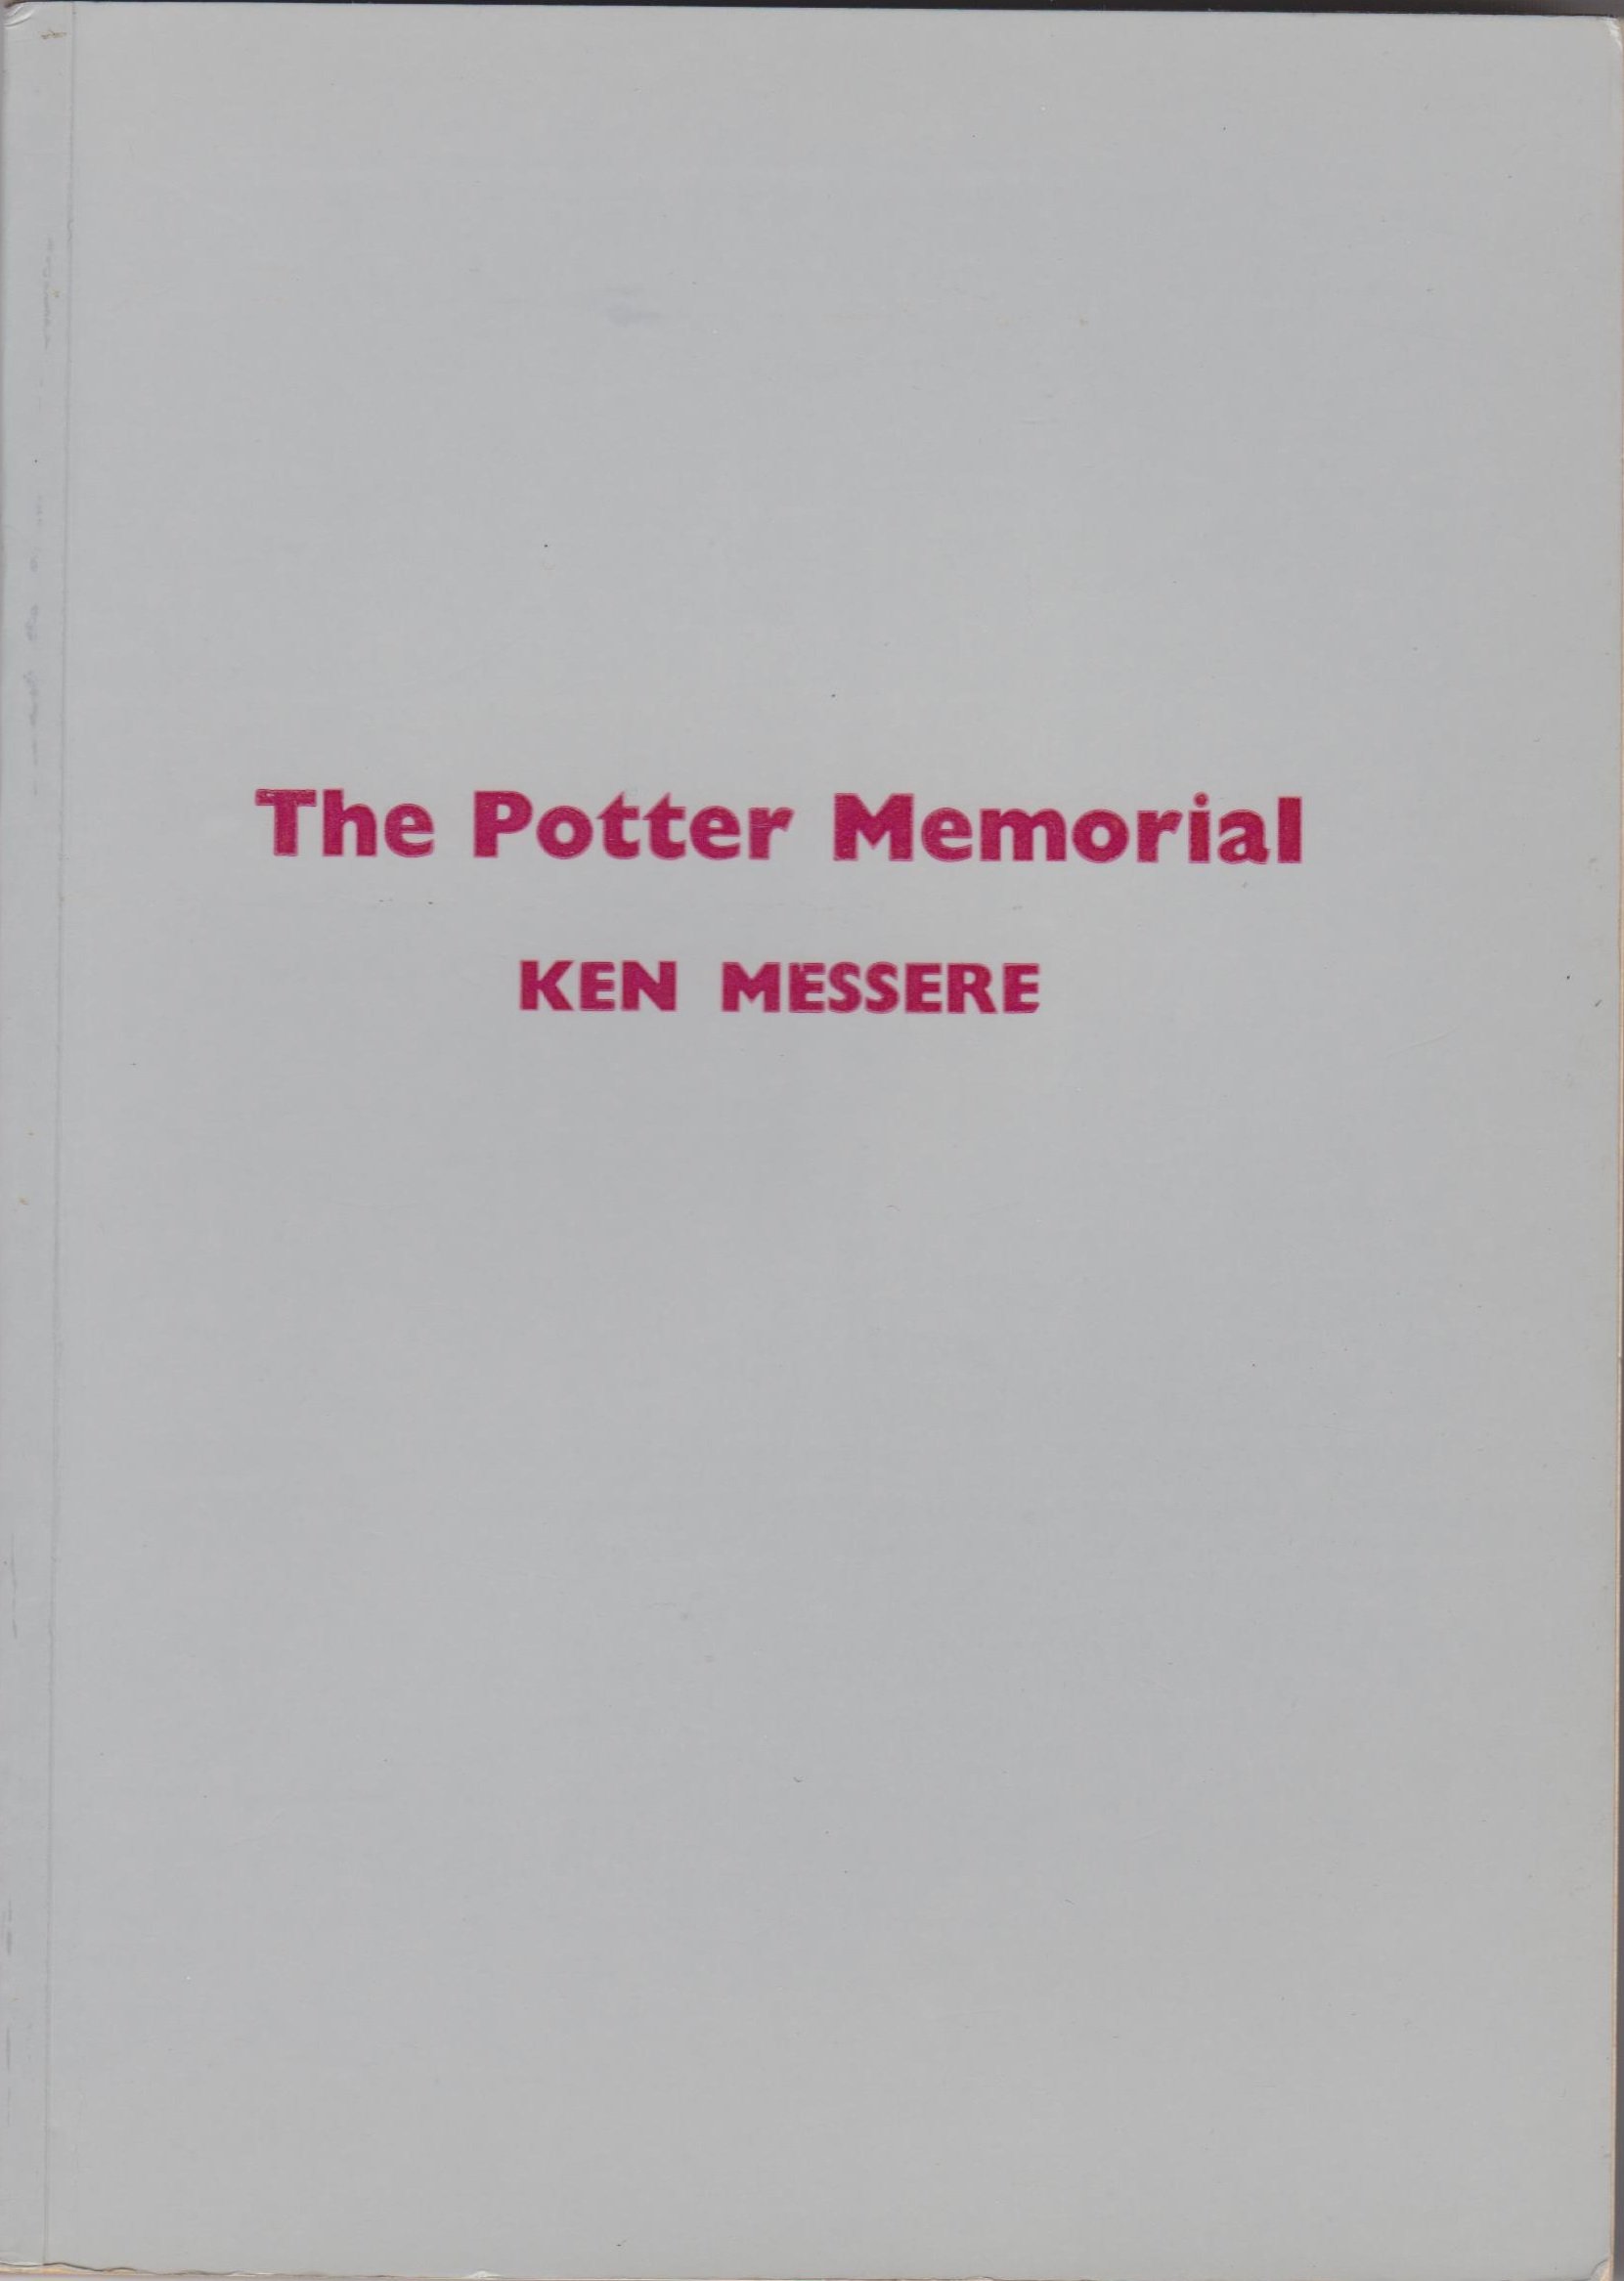 The Potter Memorial, Ken Messere, CHESS (Sutton Coldfield), 1975